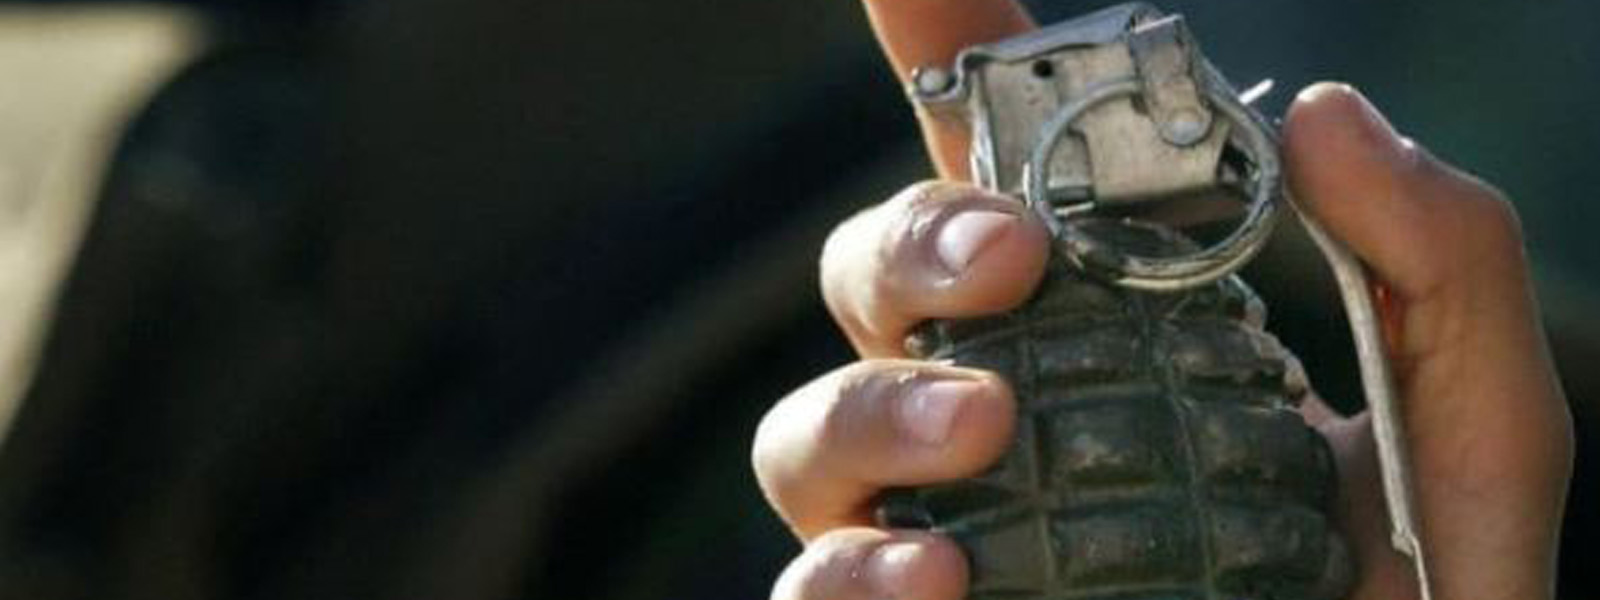 Hand-grenade discovered in Wellawaya